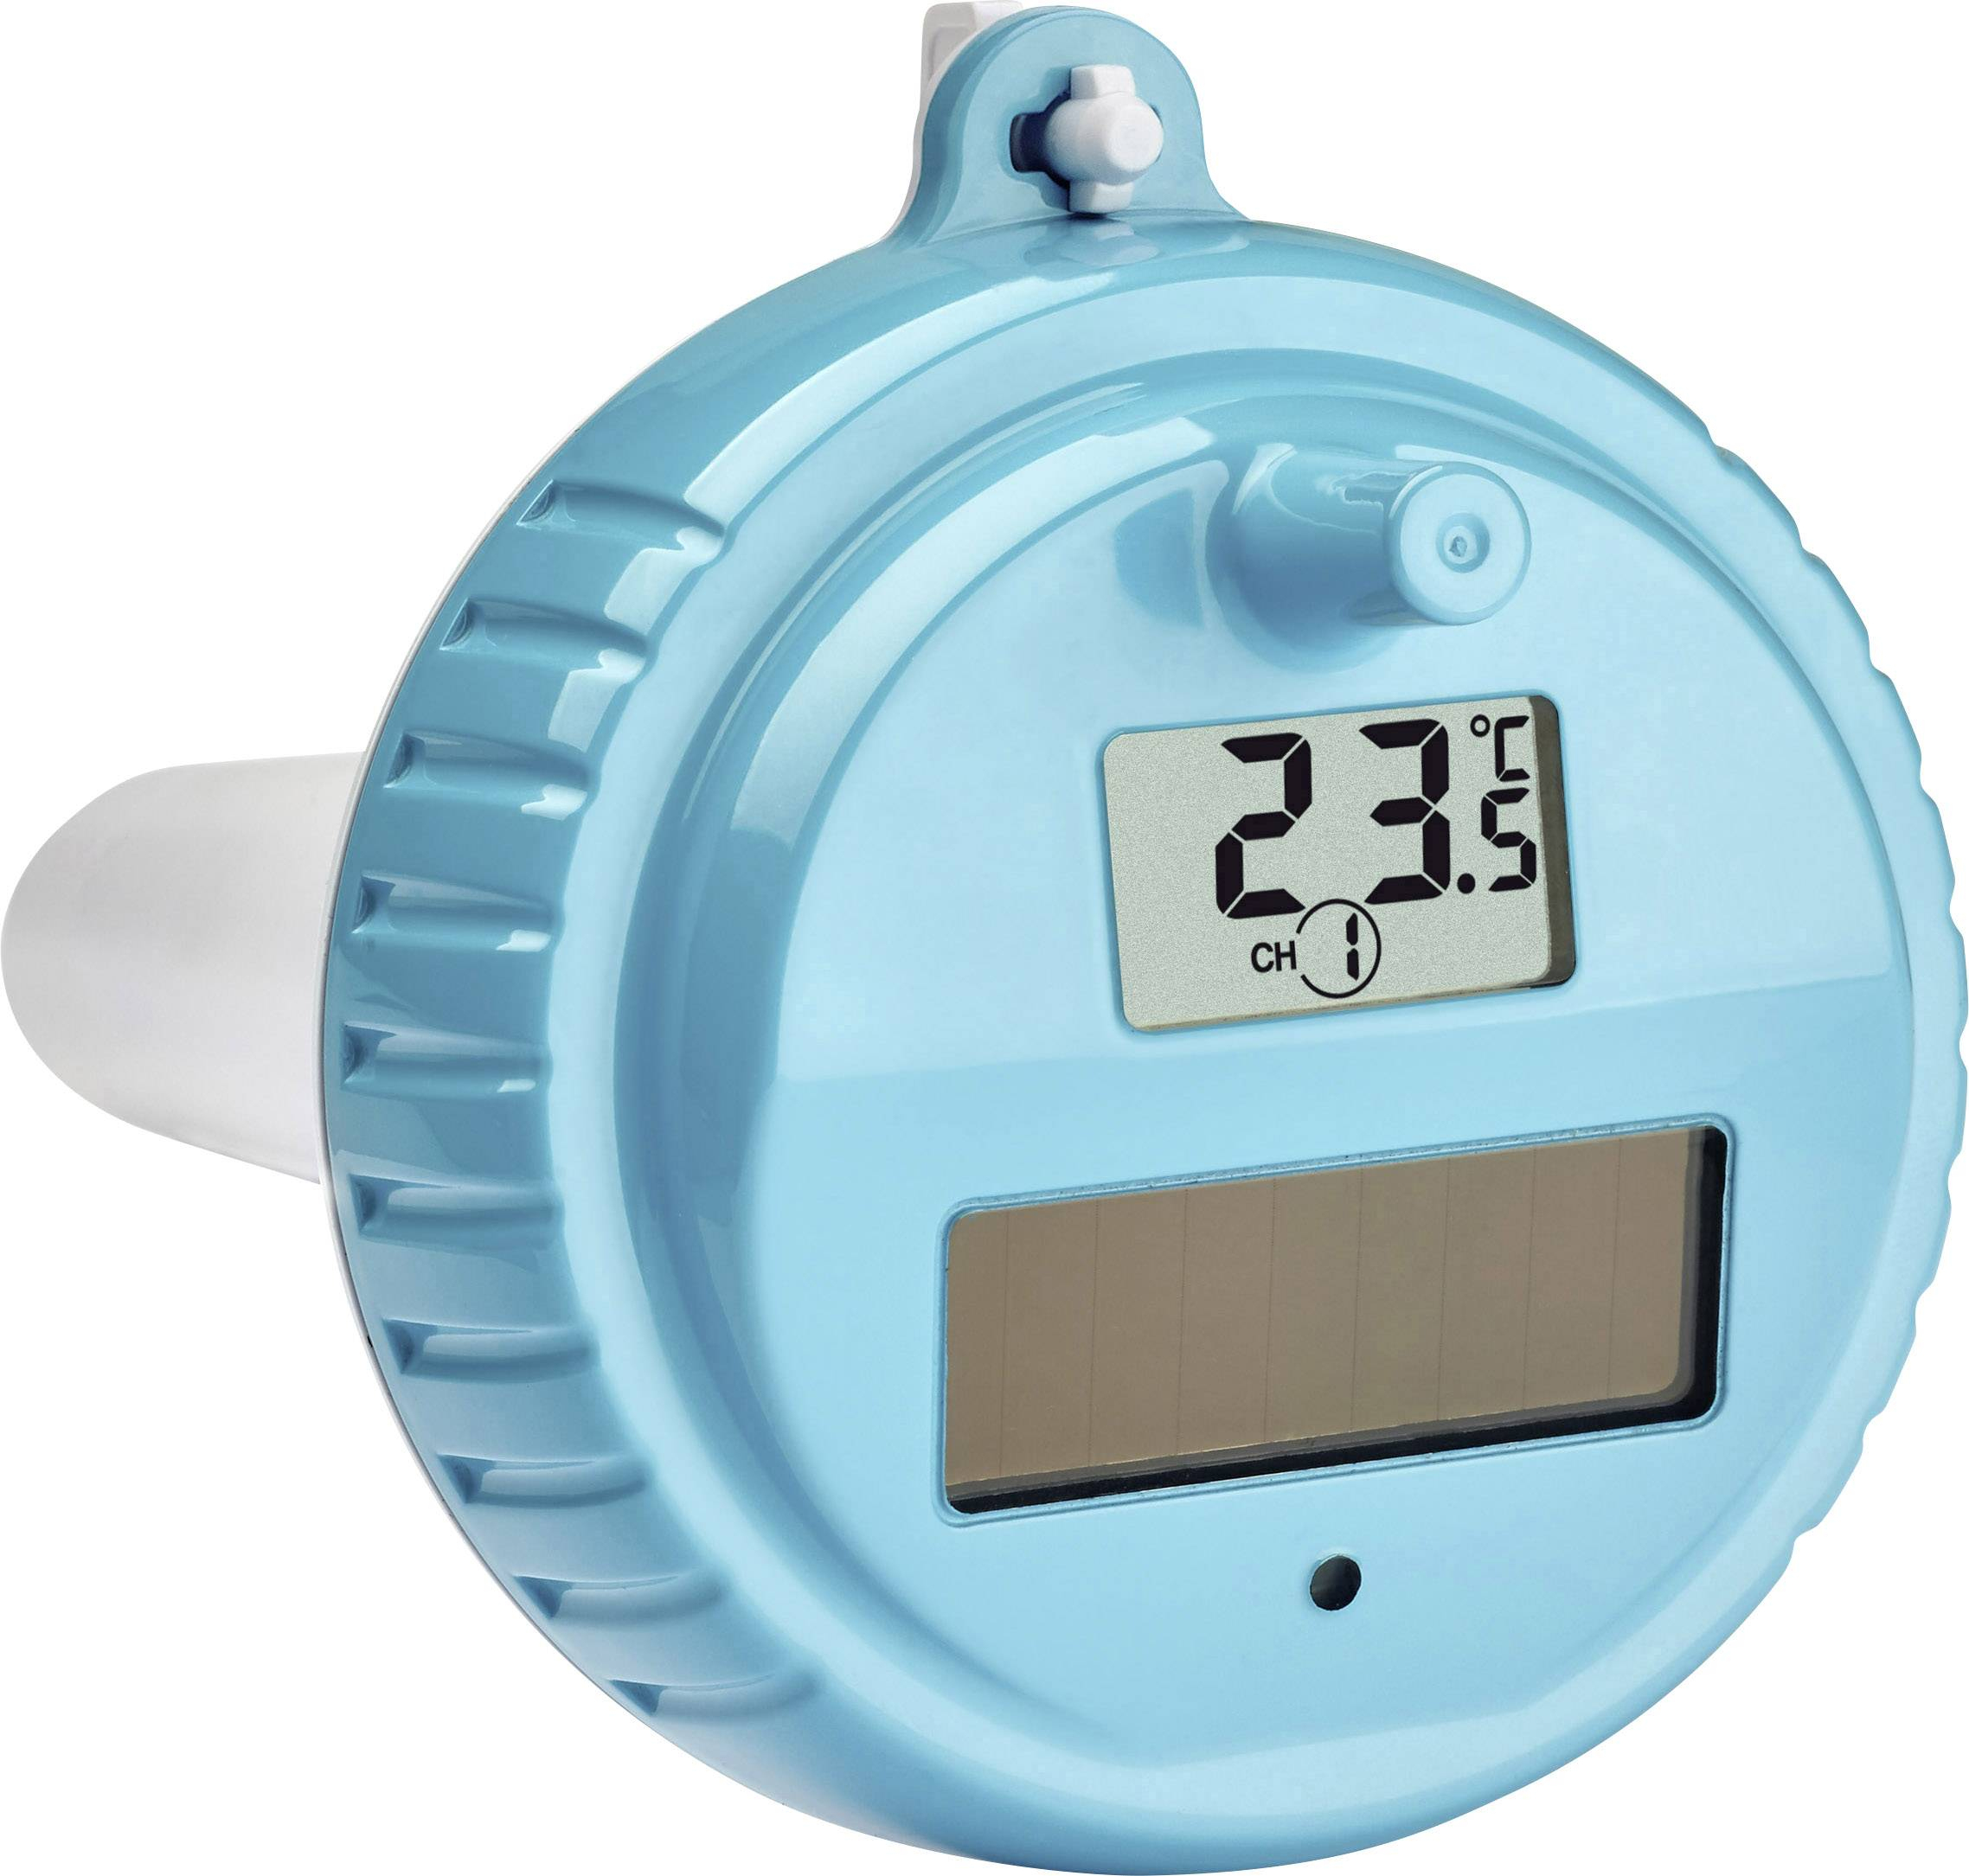 Thermomètres Tfa-Dostmann Marbella Thermomètre De Piscine ... destiné Thermometre Piscine Connecté